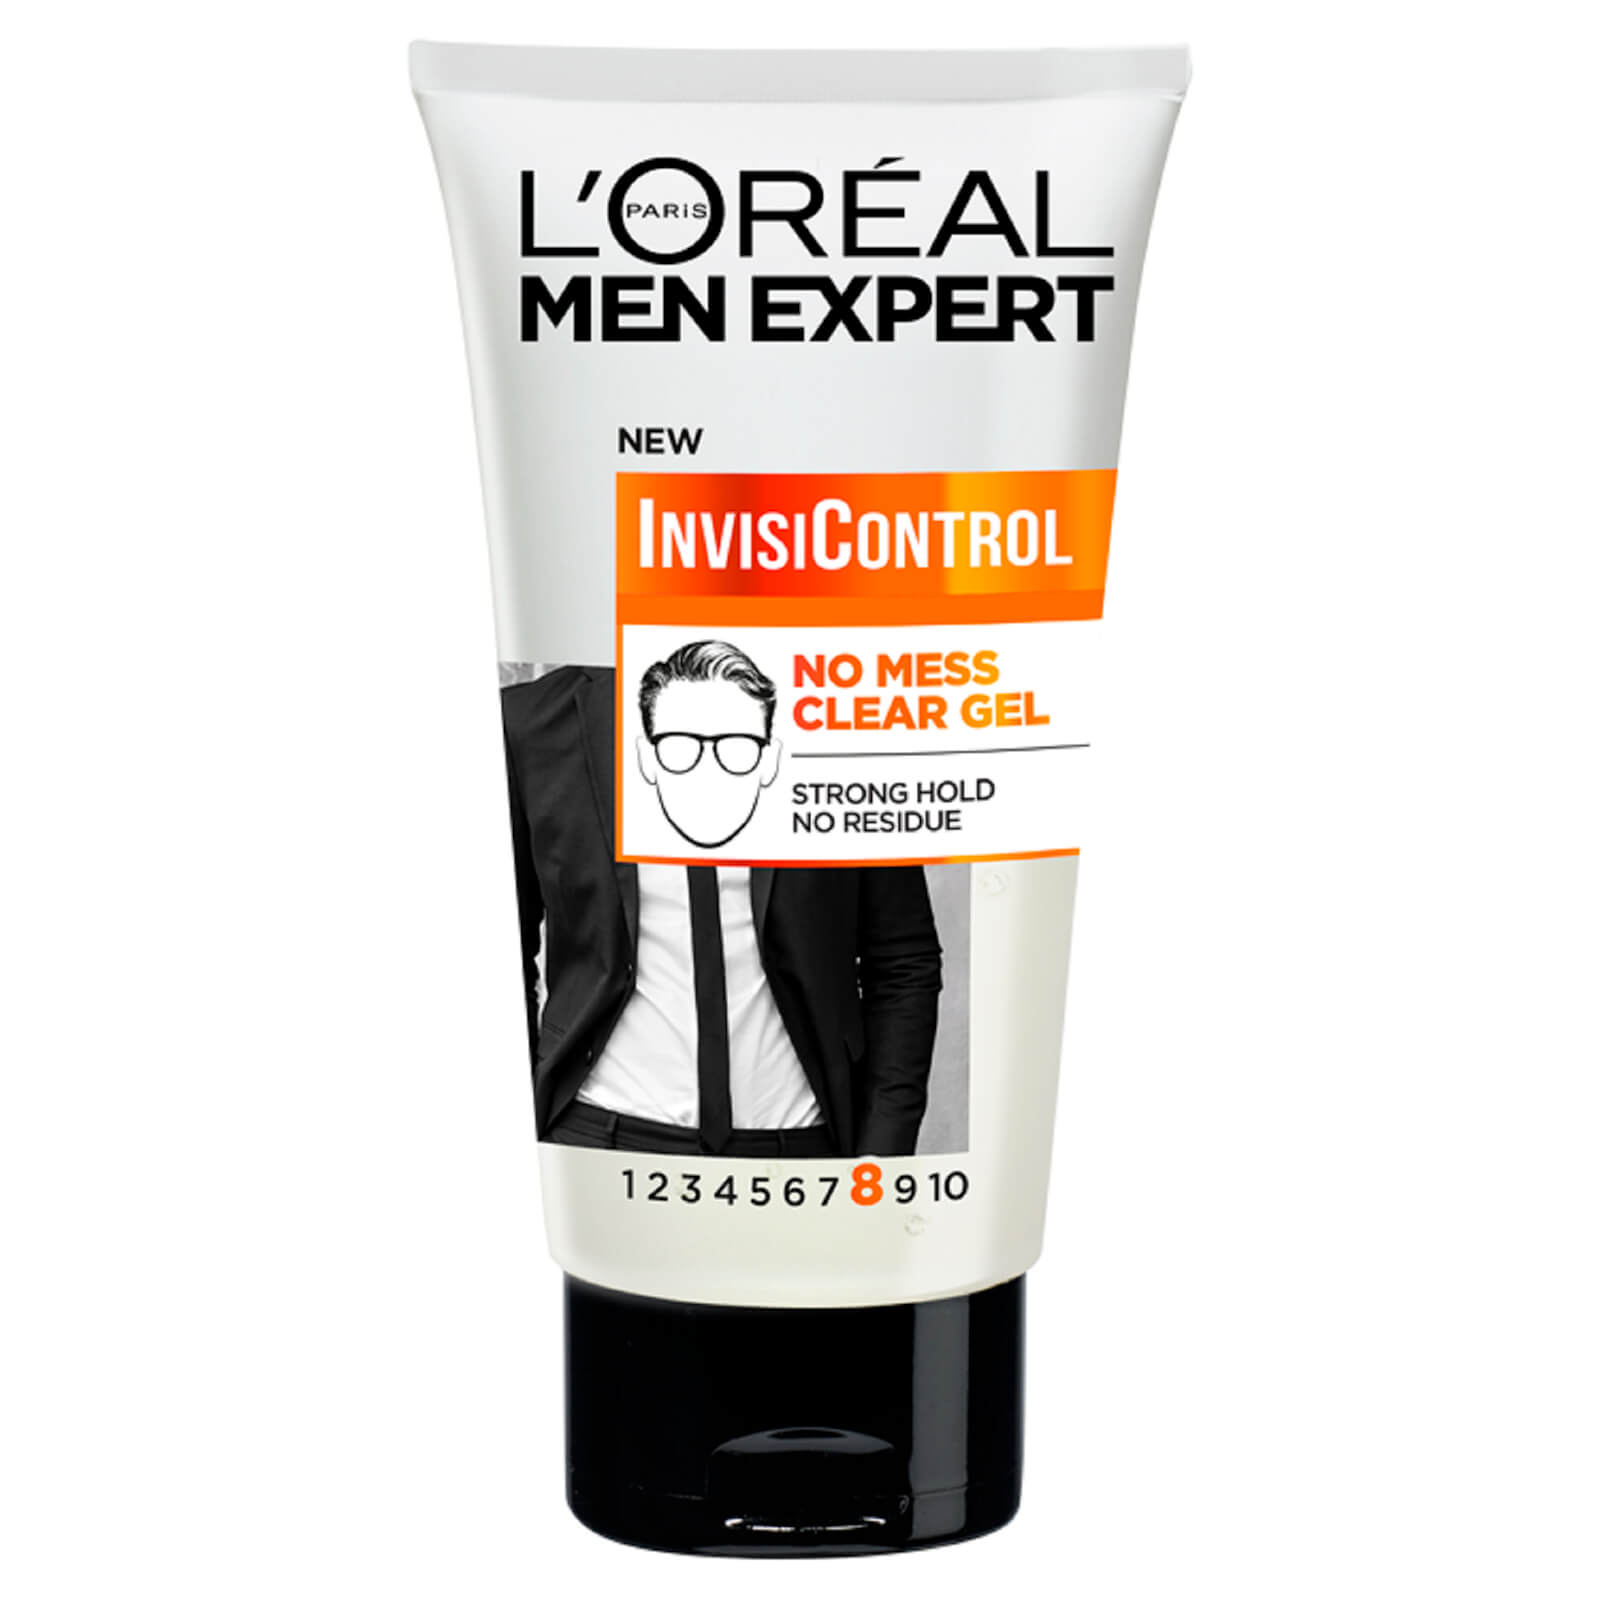 L'Oréal Men Expert InvisiControl Neat Look Control Hair Gel 150ml